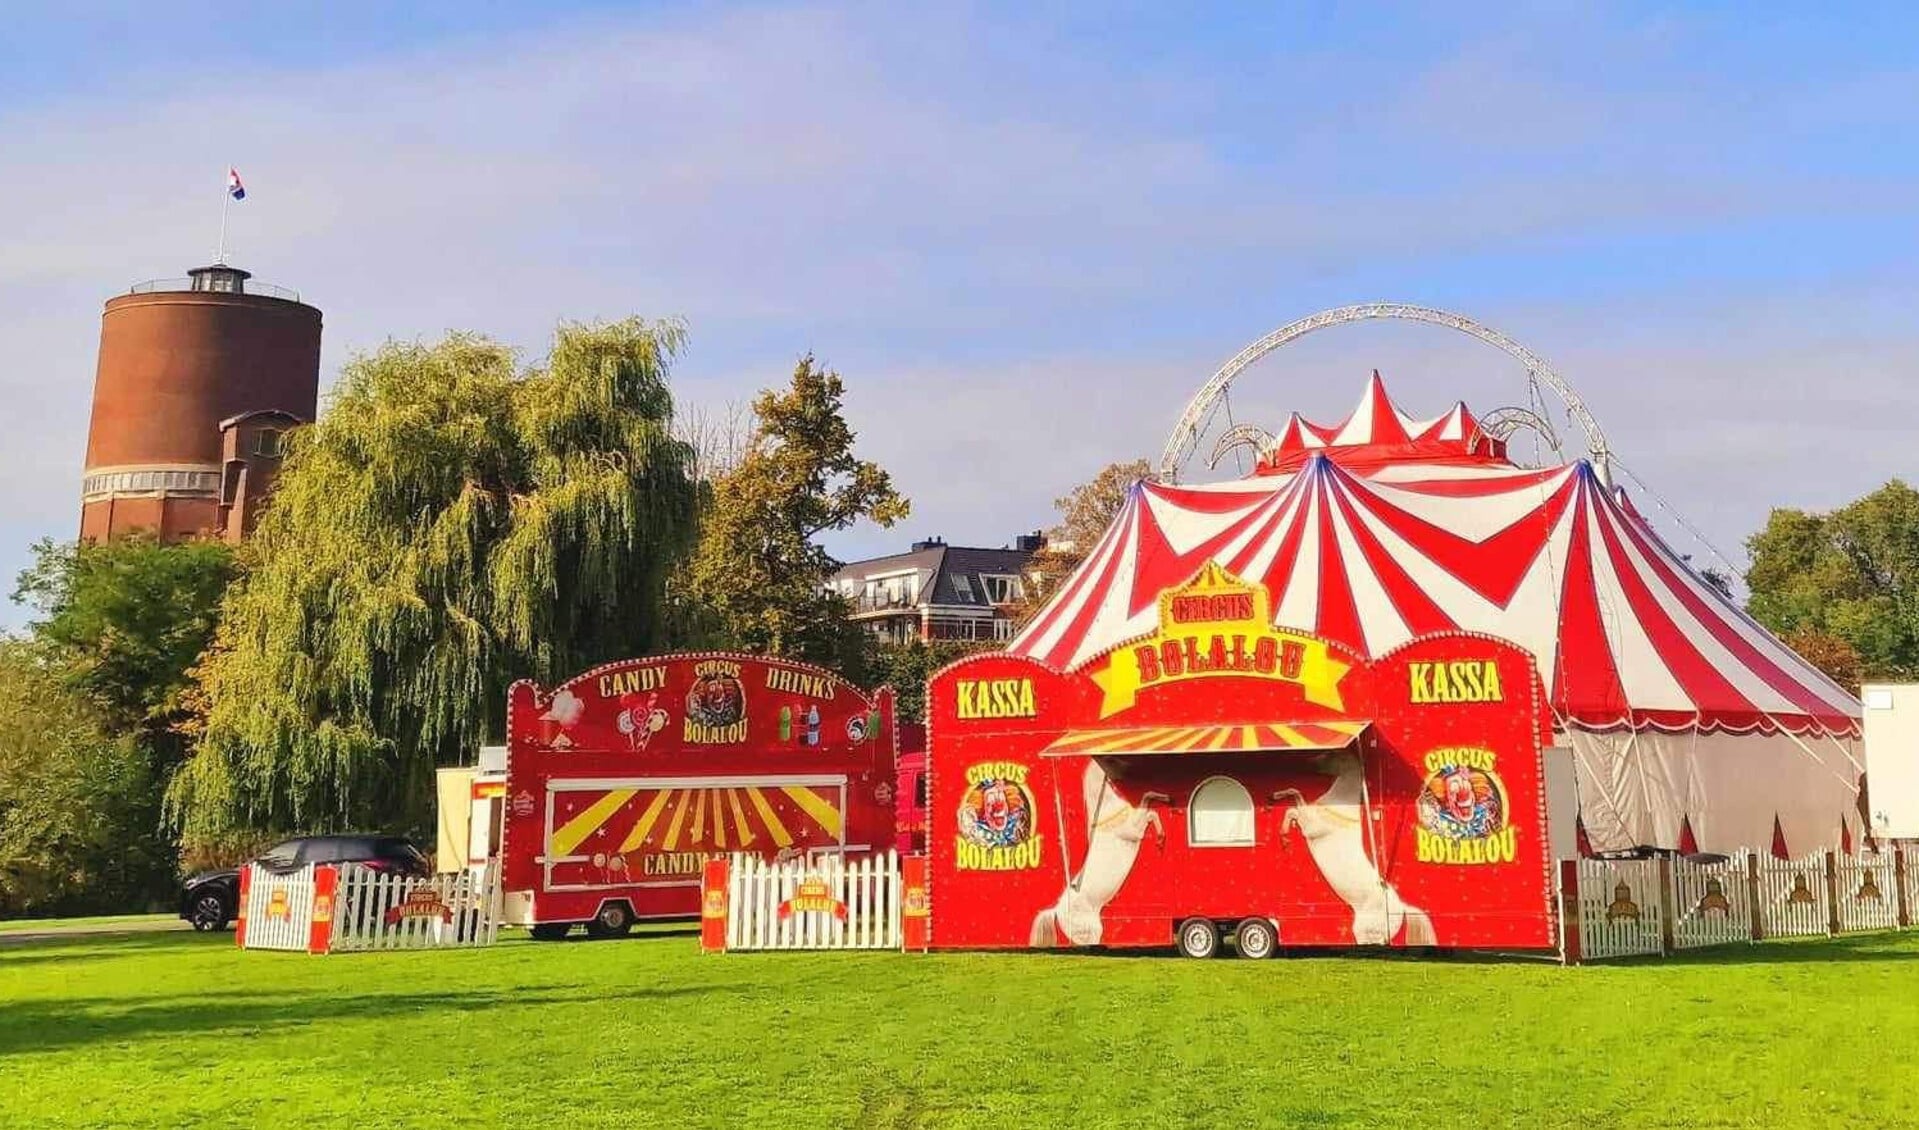 Circus Bolalou in het Oranjepark.